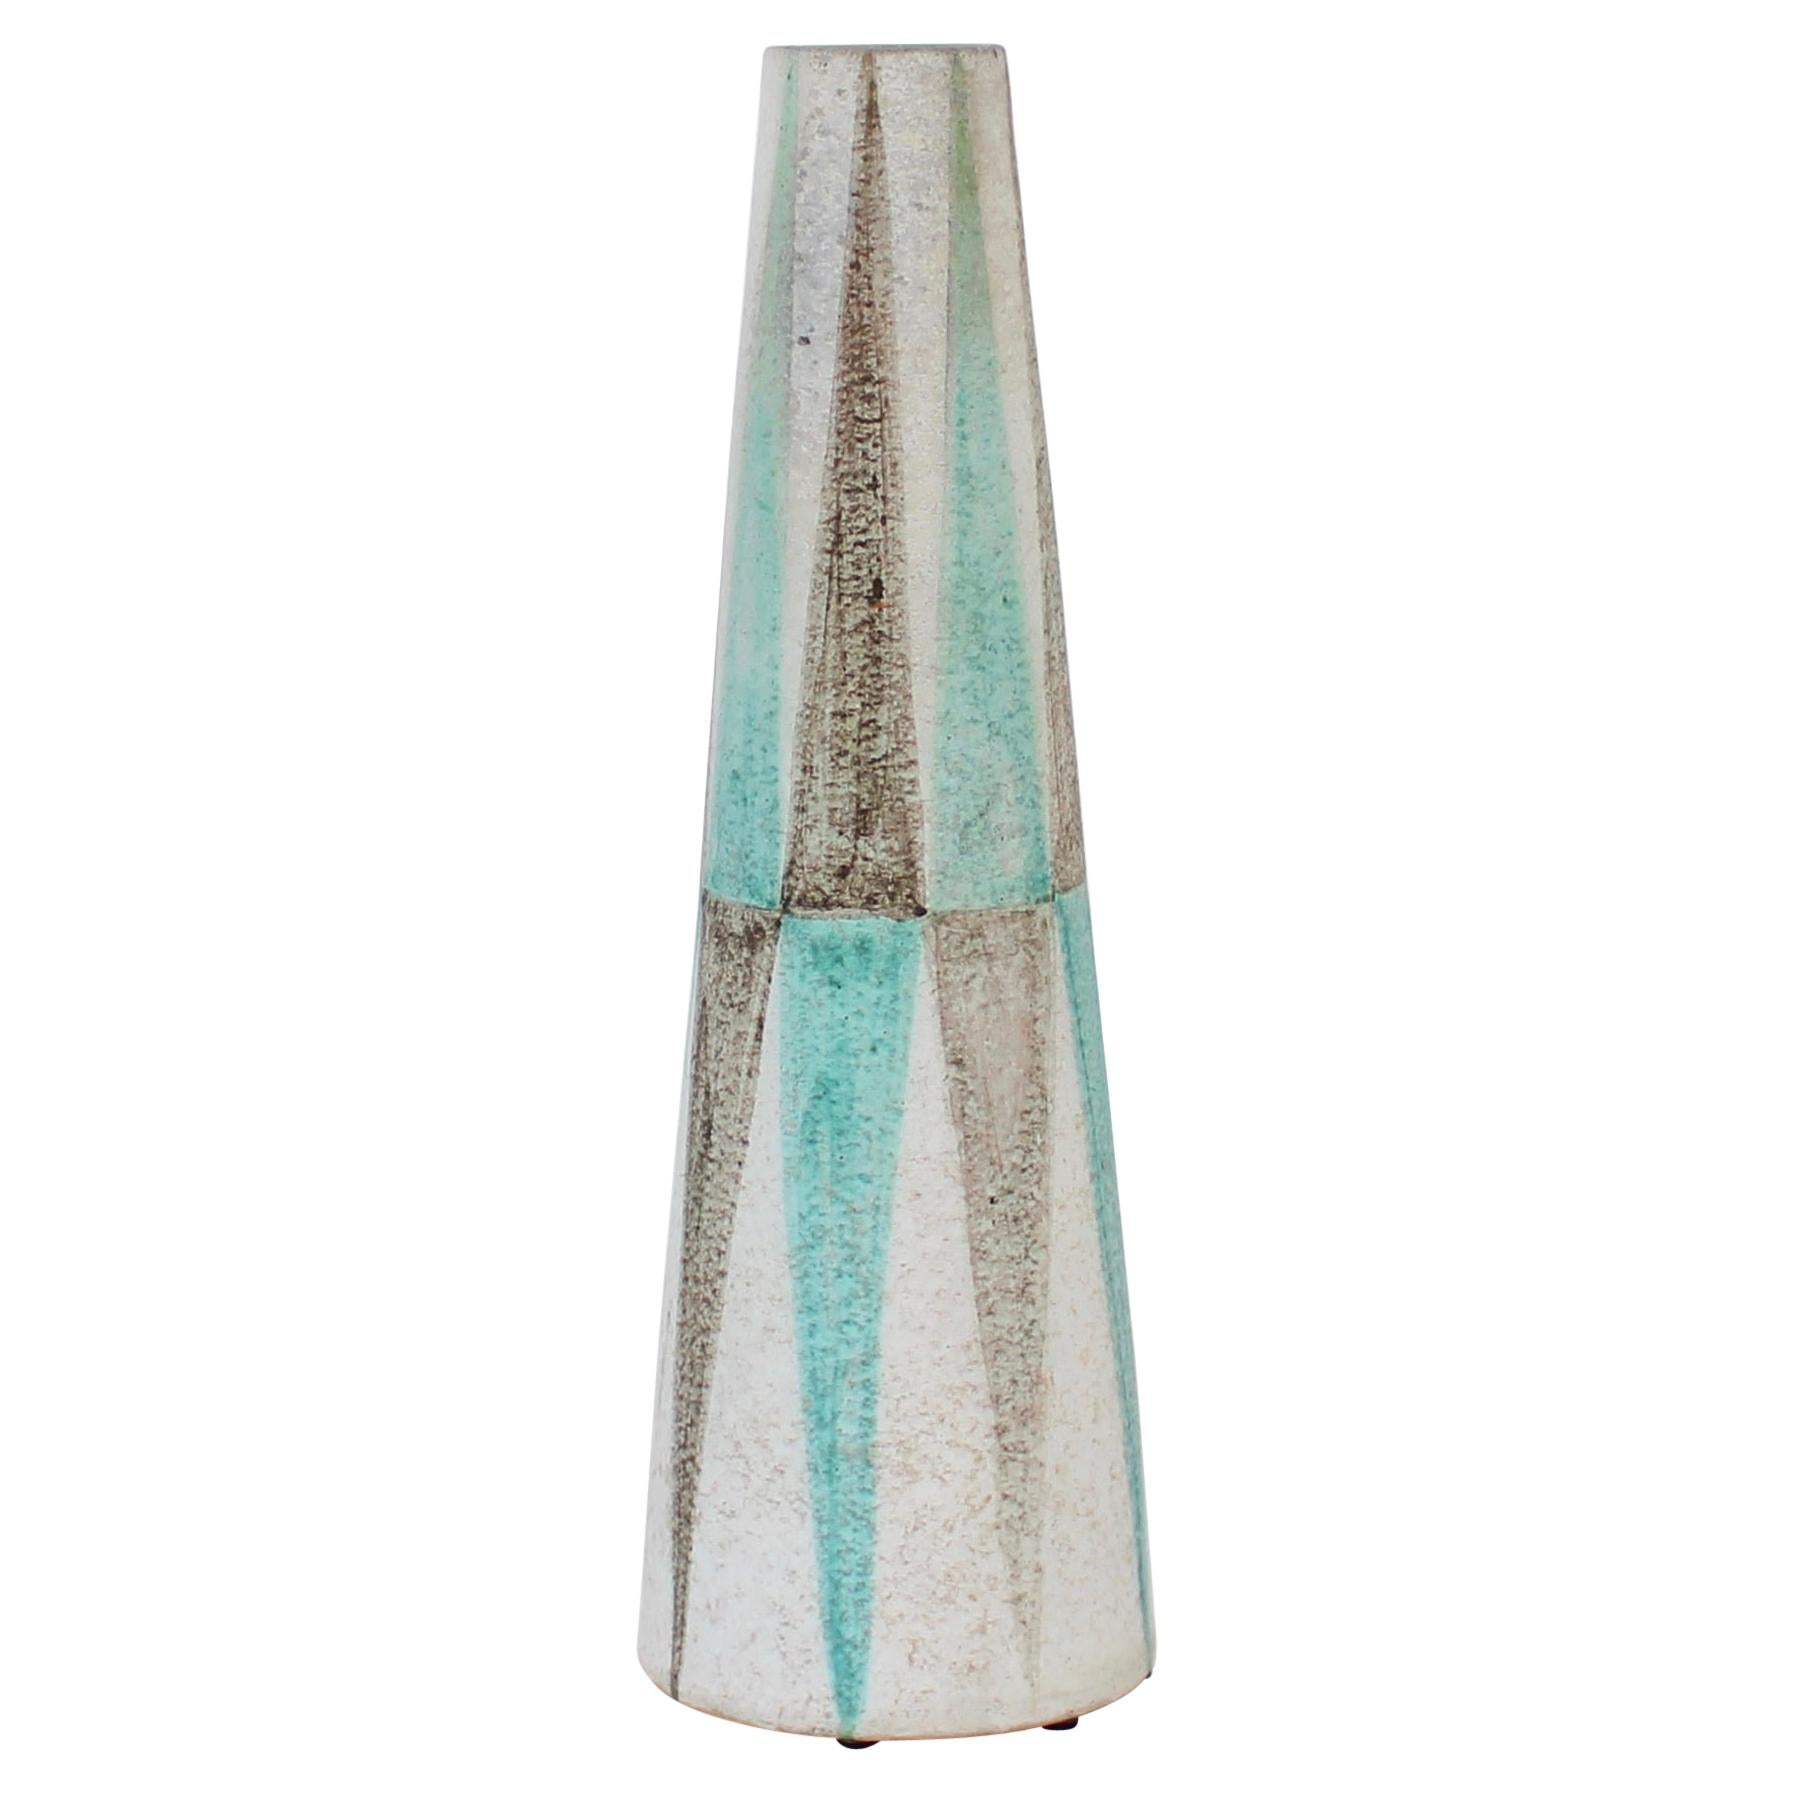 Ceramic Polychrome Vase Italy Raymor Attributed to Marcello Fantoni